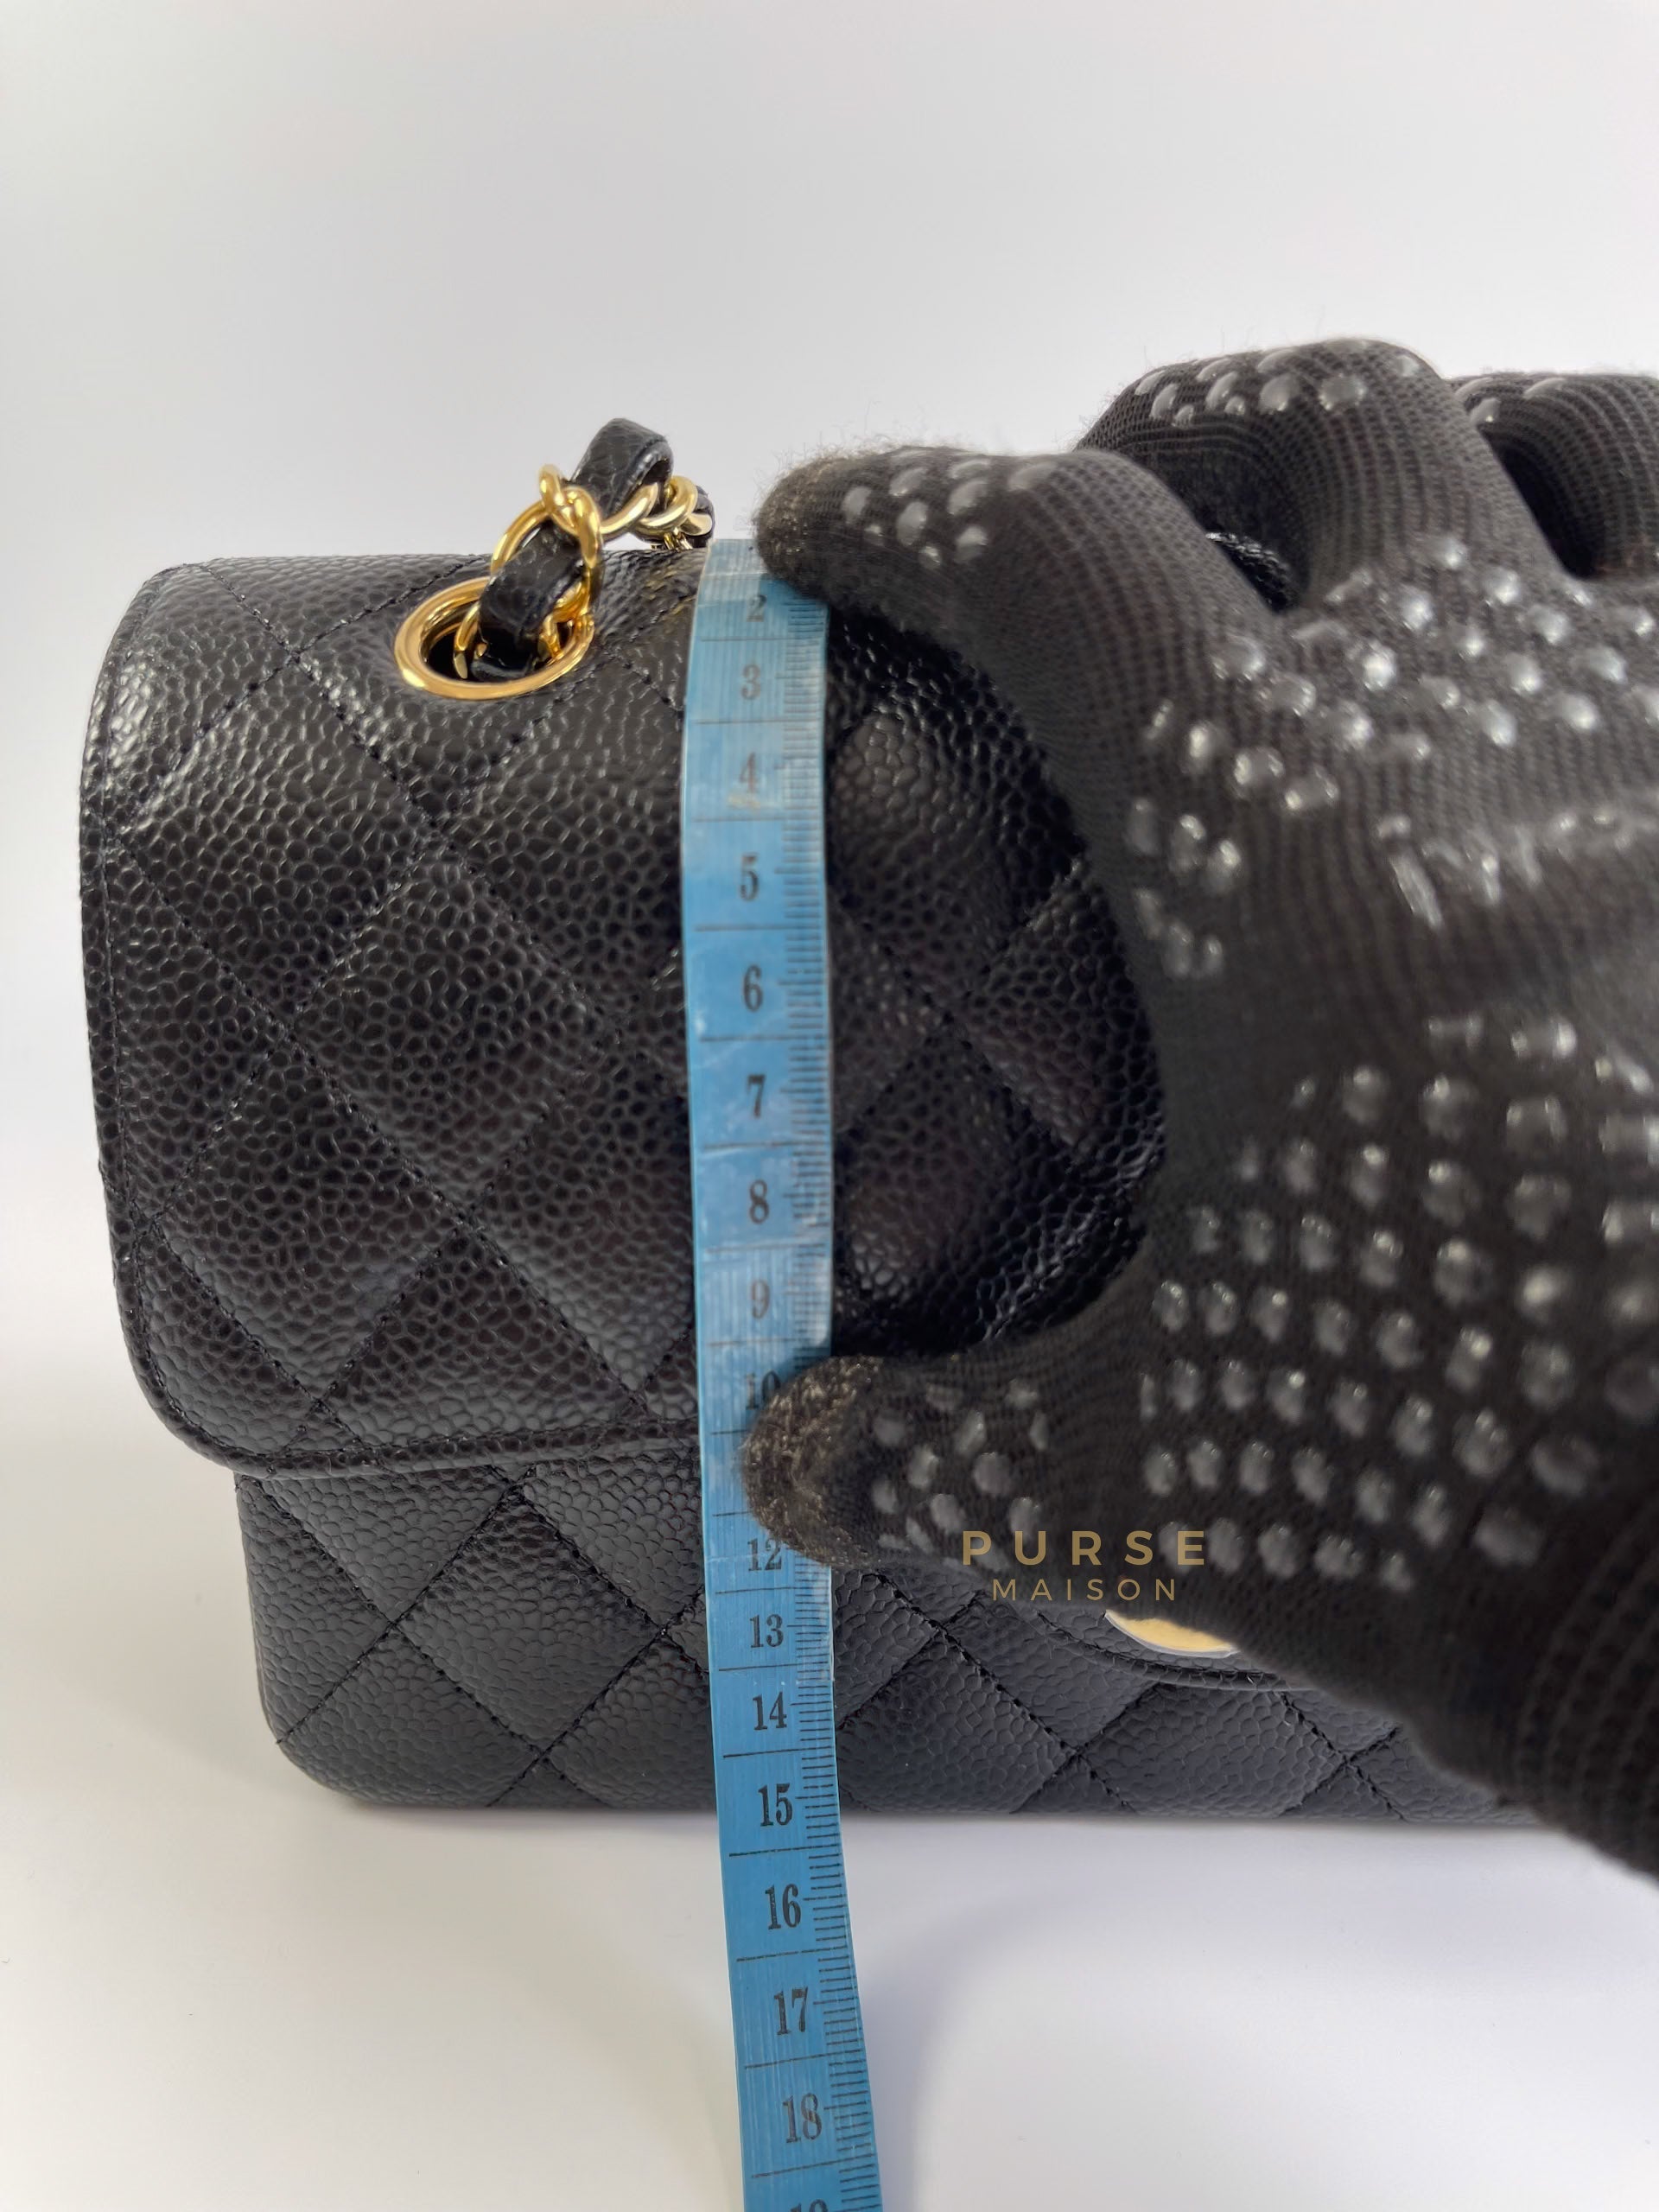 Classic Double Flap Small Black Caviar Gold hardware (Microchip) | Purse Maison Luxury Bags Shop